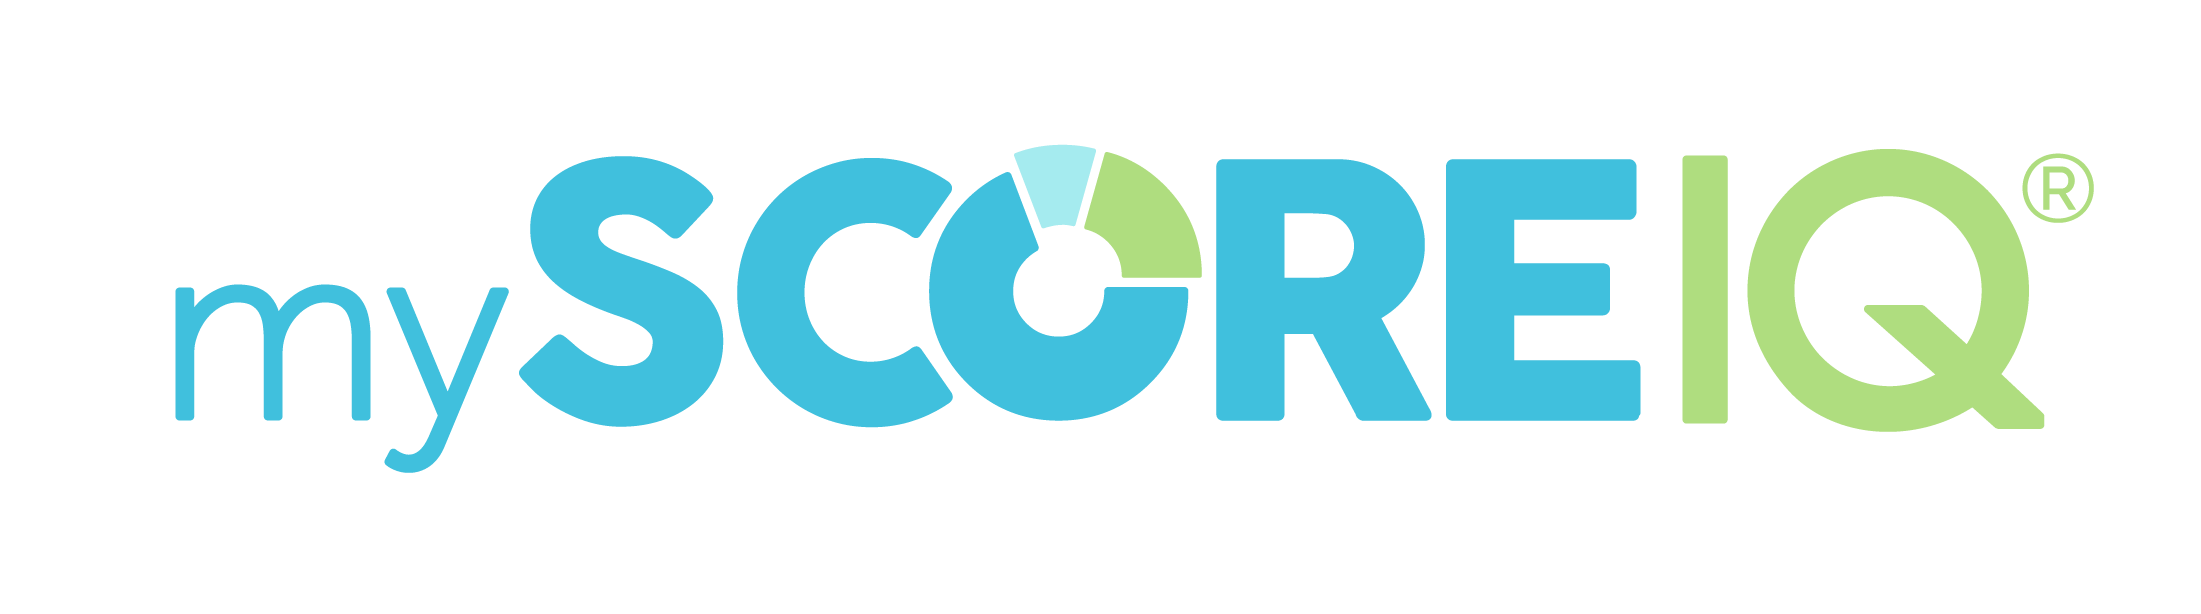 myscoreiq logo